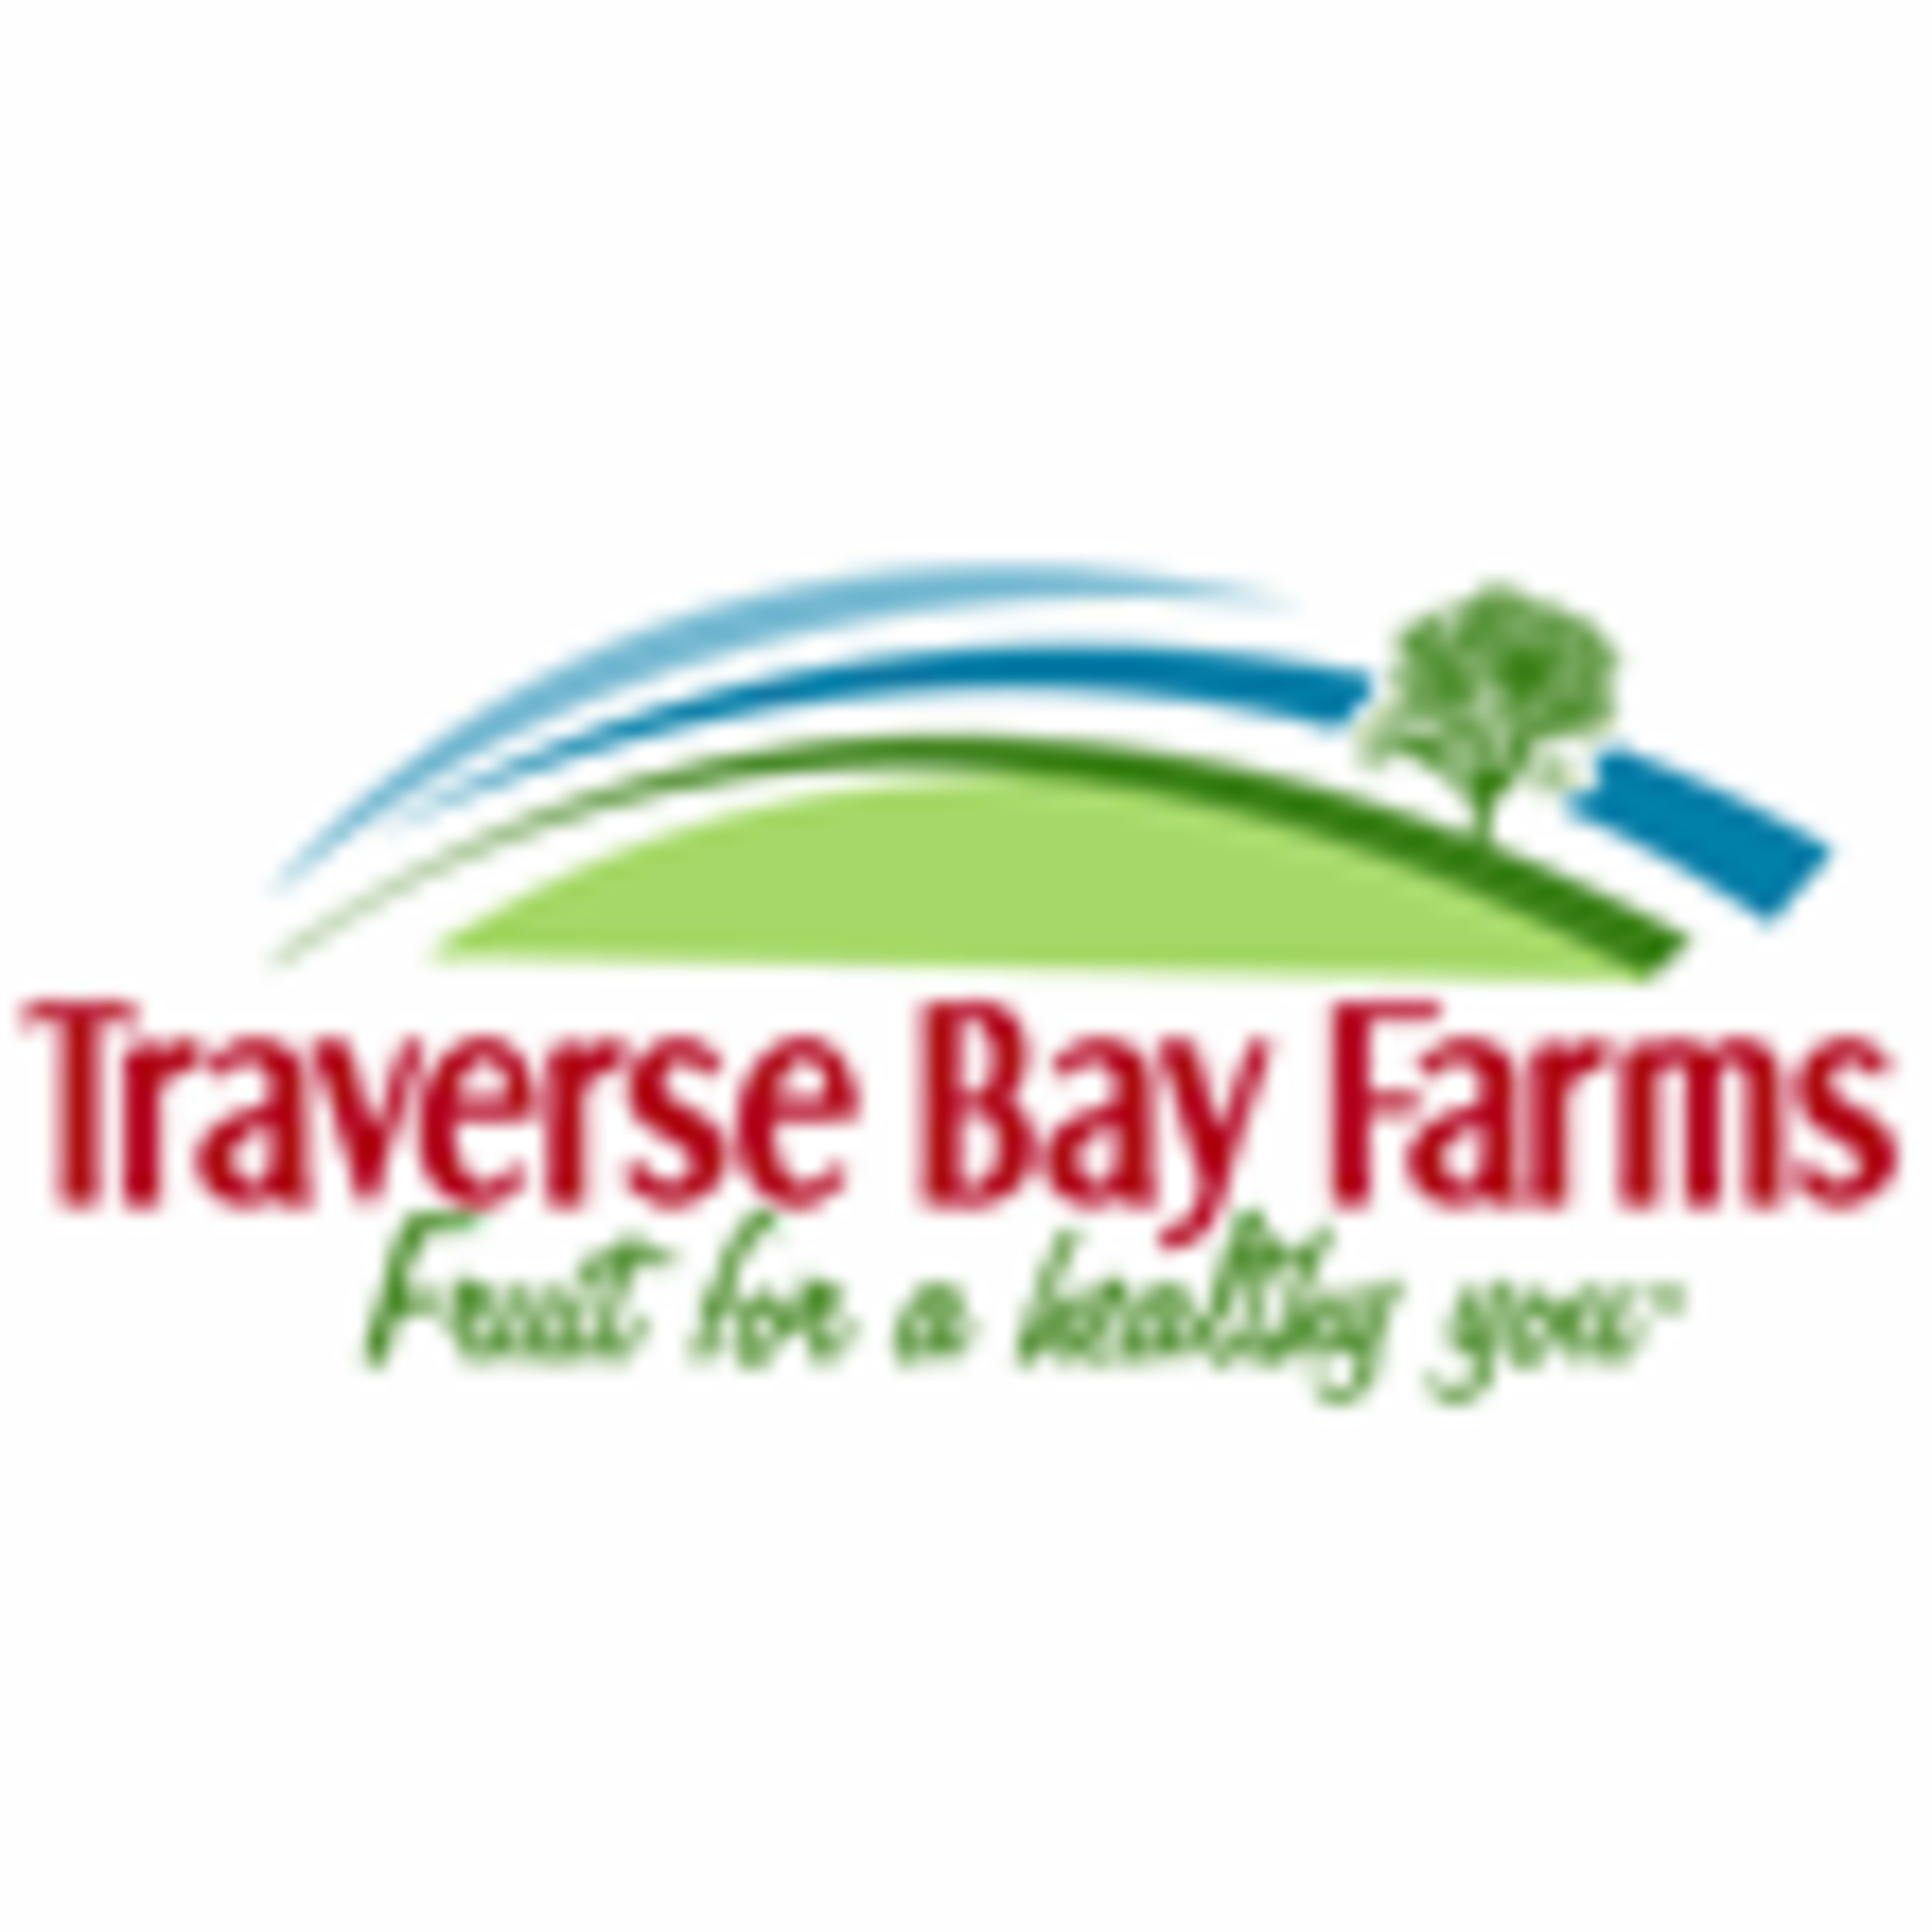 Traverse Bay FarmsCode